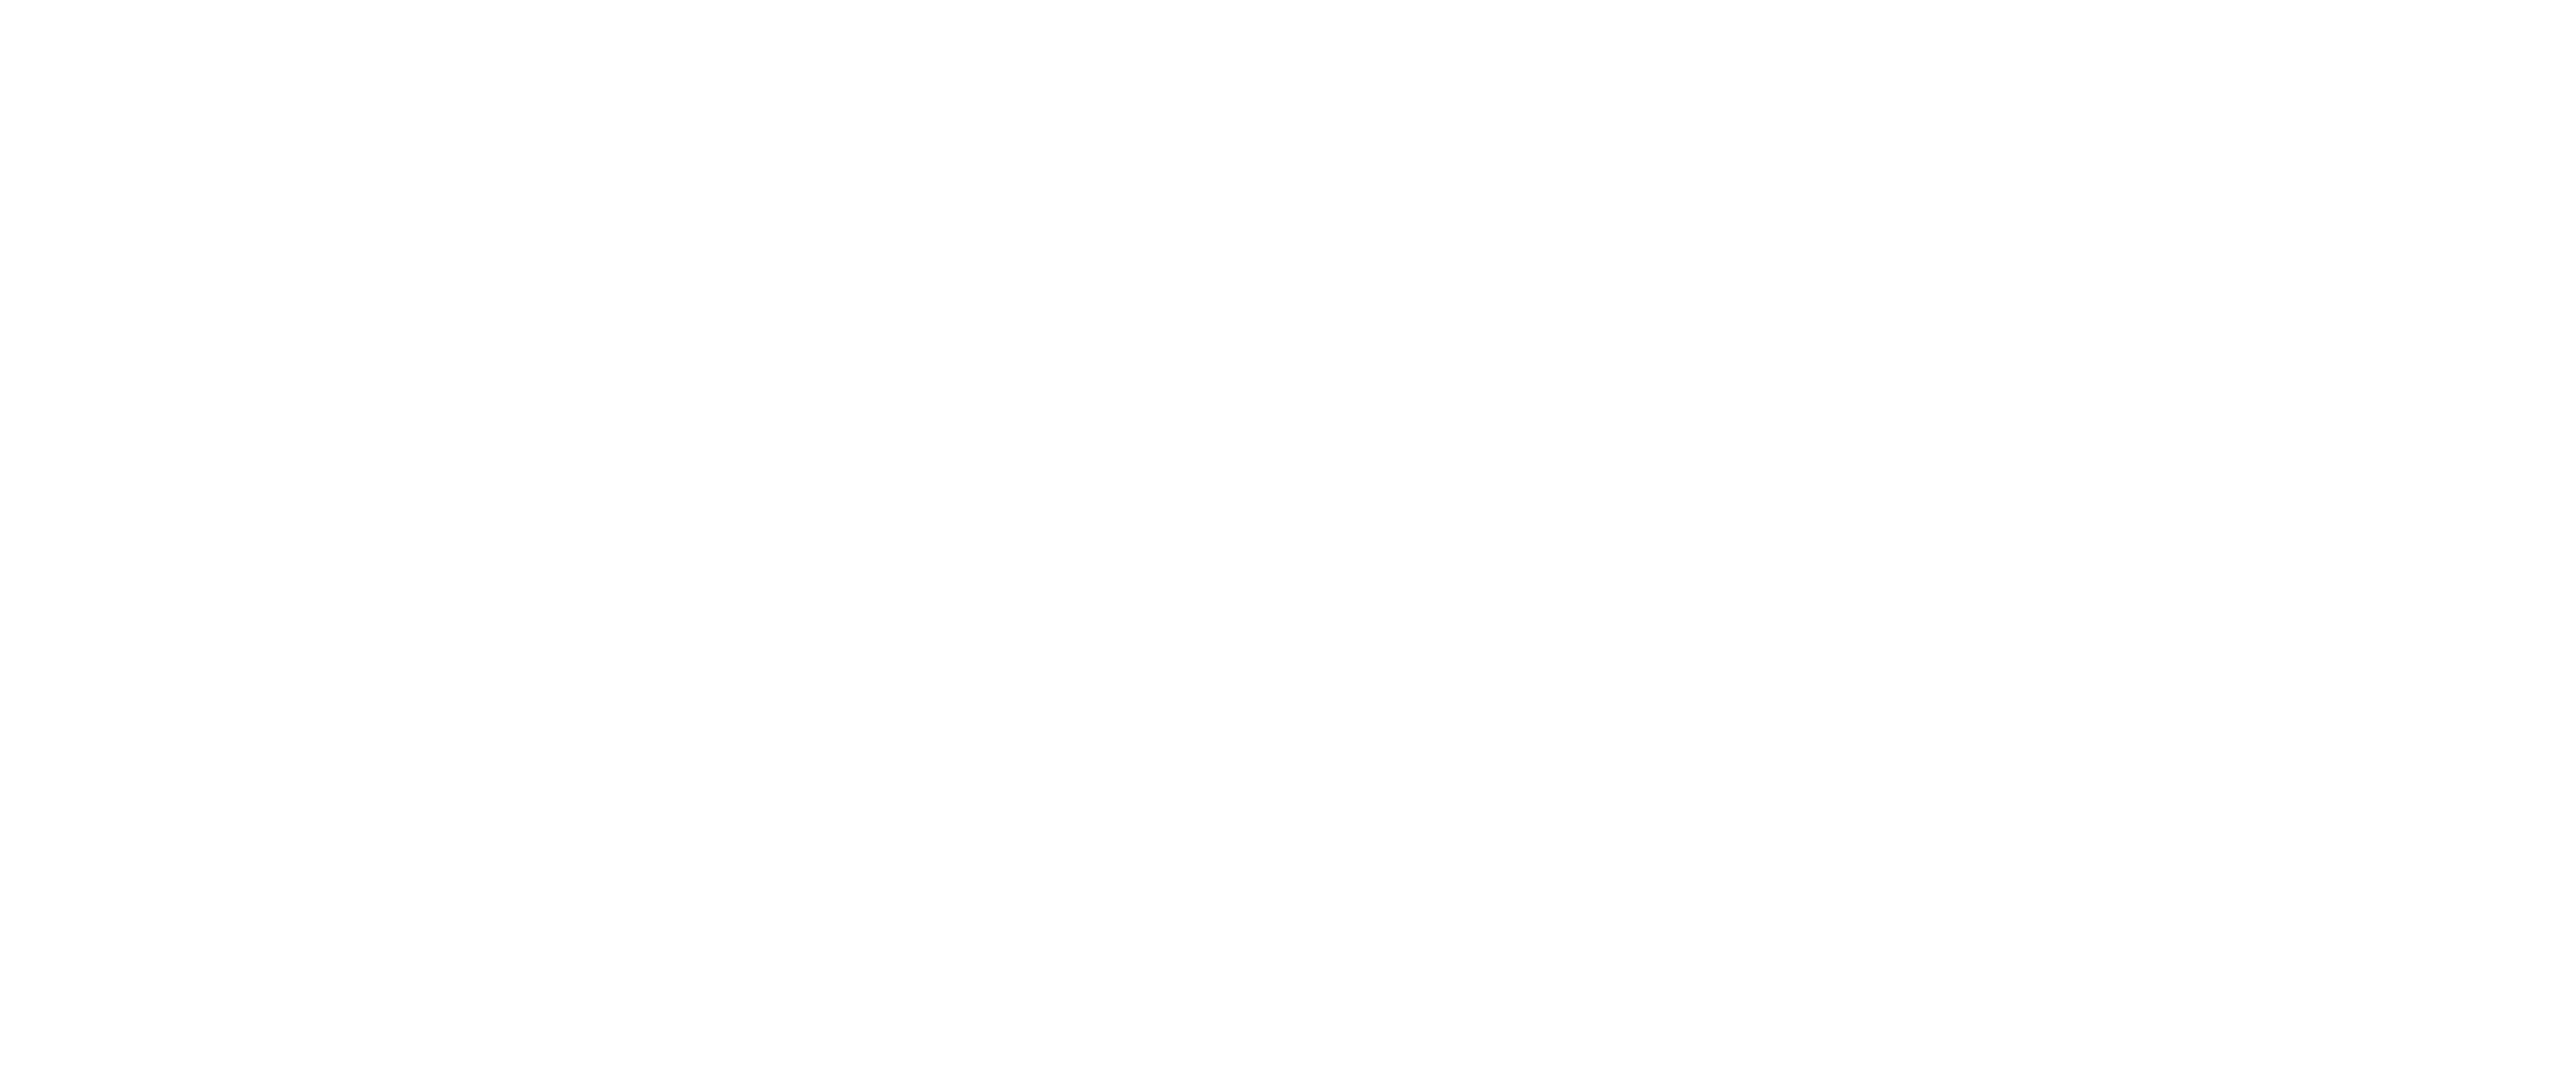 Killer Unicorn logo